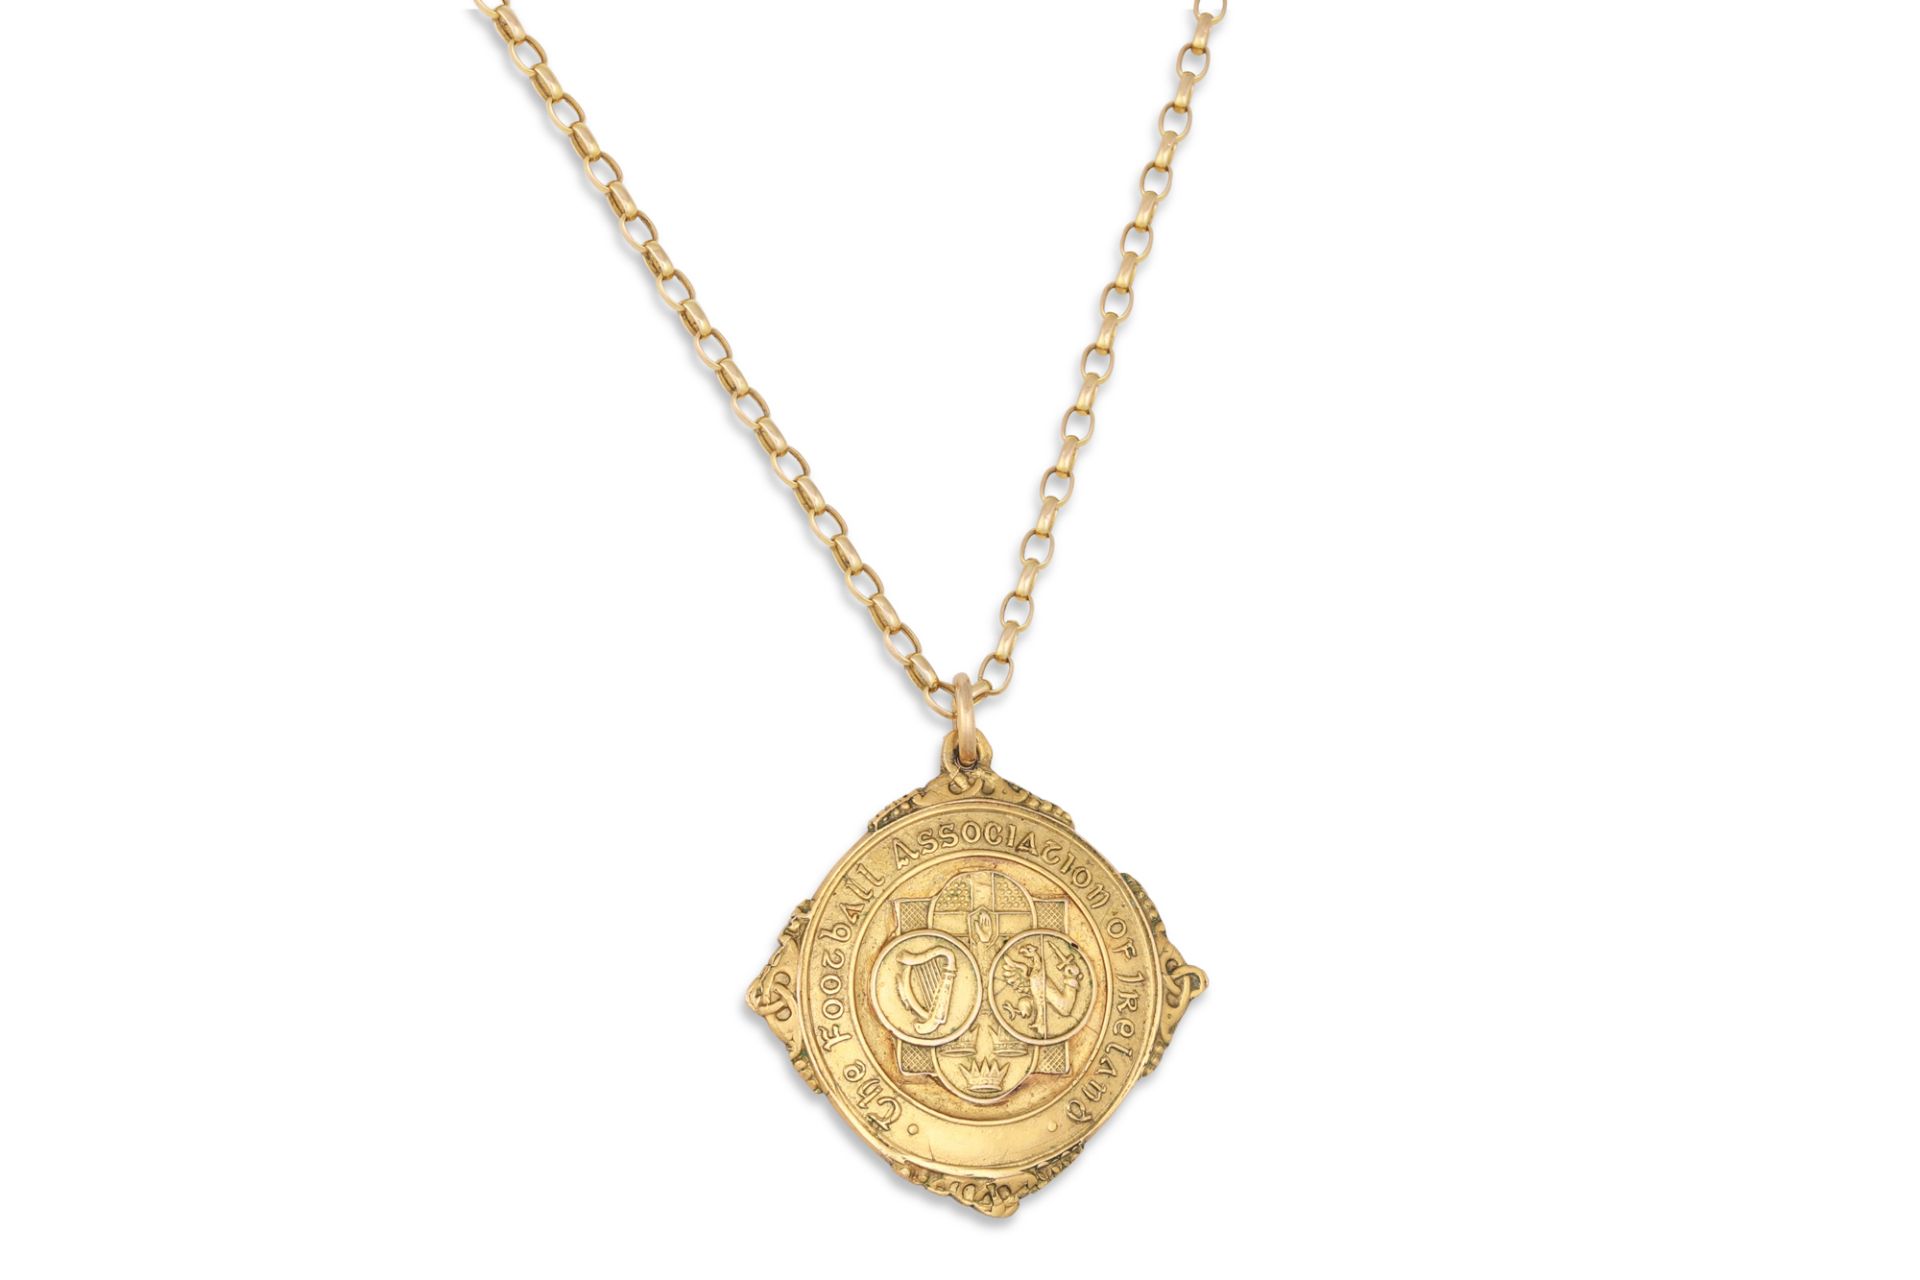 A 9CT GOLD FAI MEDAL, on a 9ct gold chain